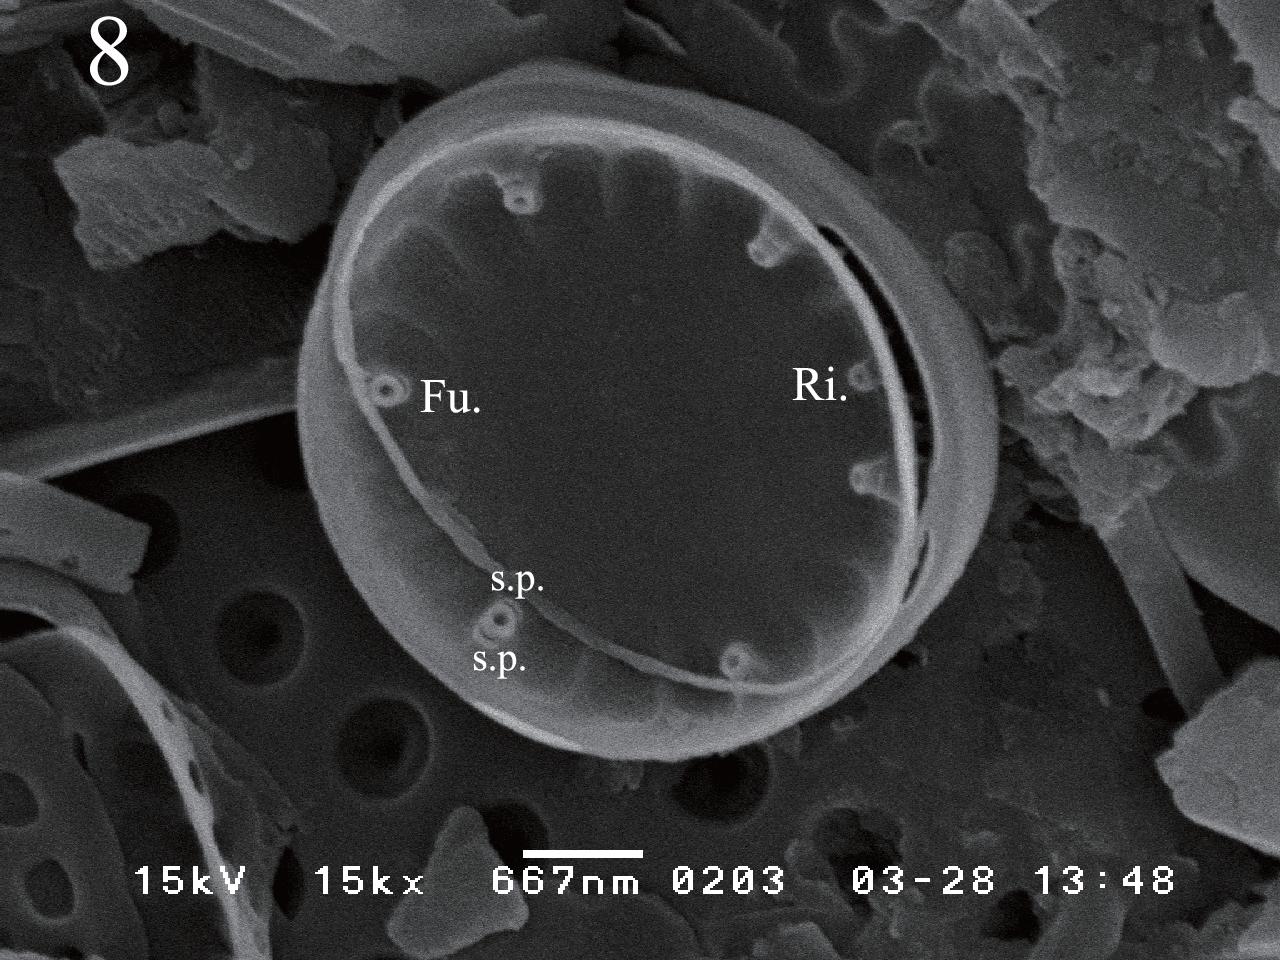 Cyclotella atomus var. marina SEM photos (Fu., Fultoportula; Ri., Rimoportula; s.p., satellite pore). Fig. 8. Six fultoportulae with two satellite pores arranged at every third cost, while one rimoportula is located beside one fultoportula.